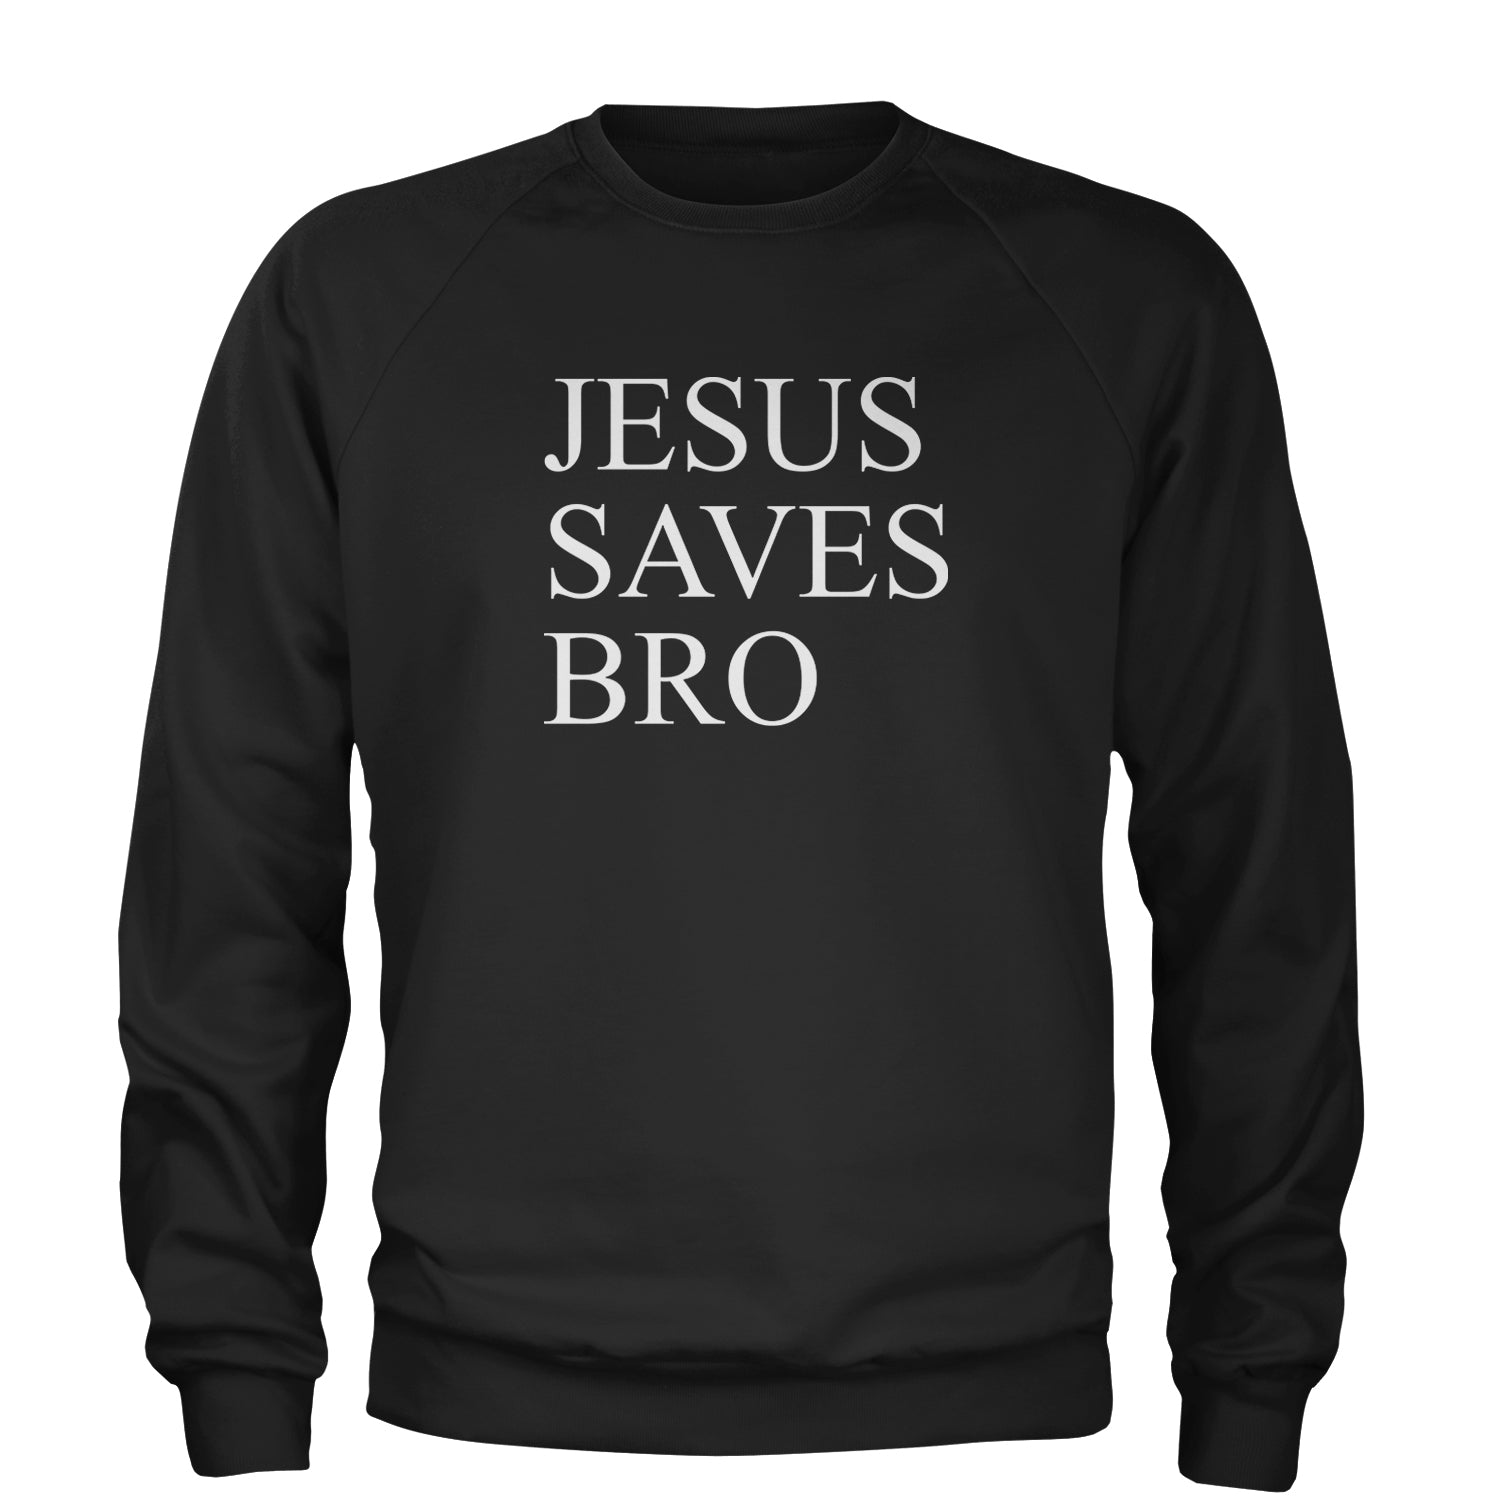 Jesus Saves Bro Adult Crewneck Sweatshirt catholic, christian, christianity, church, jesus, religion, religuous by Expression Tees